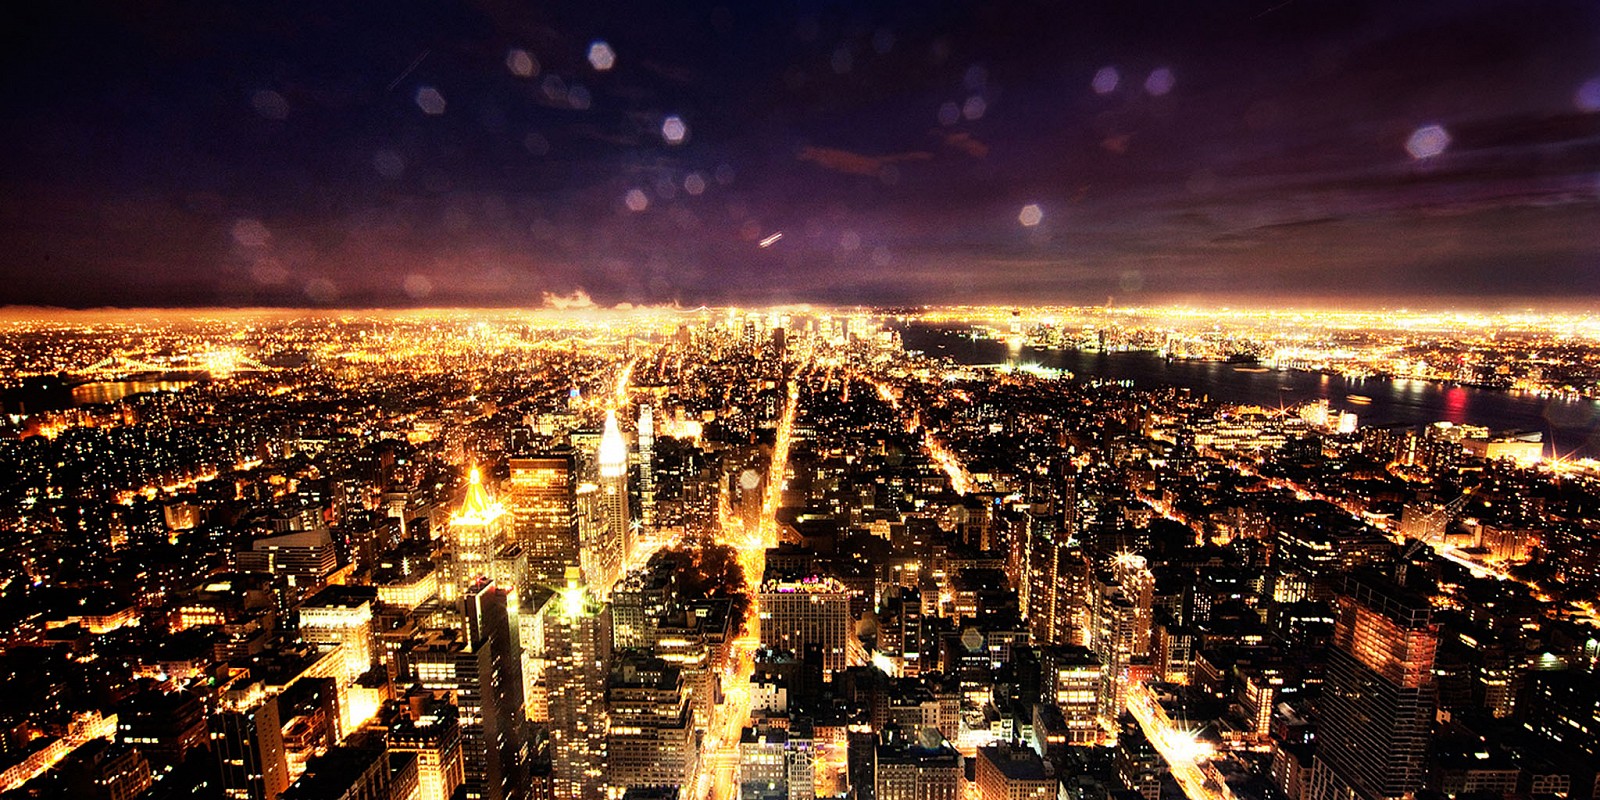 David Drebin, Rain in NYC, 2009
Digital C Print, 20 x 40 inches; 30 x 60 inches; 40 x 80 inches